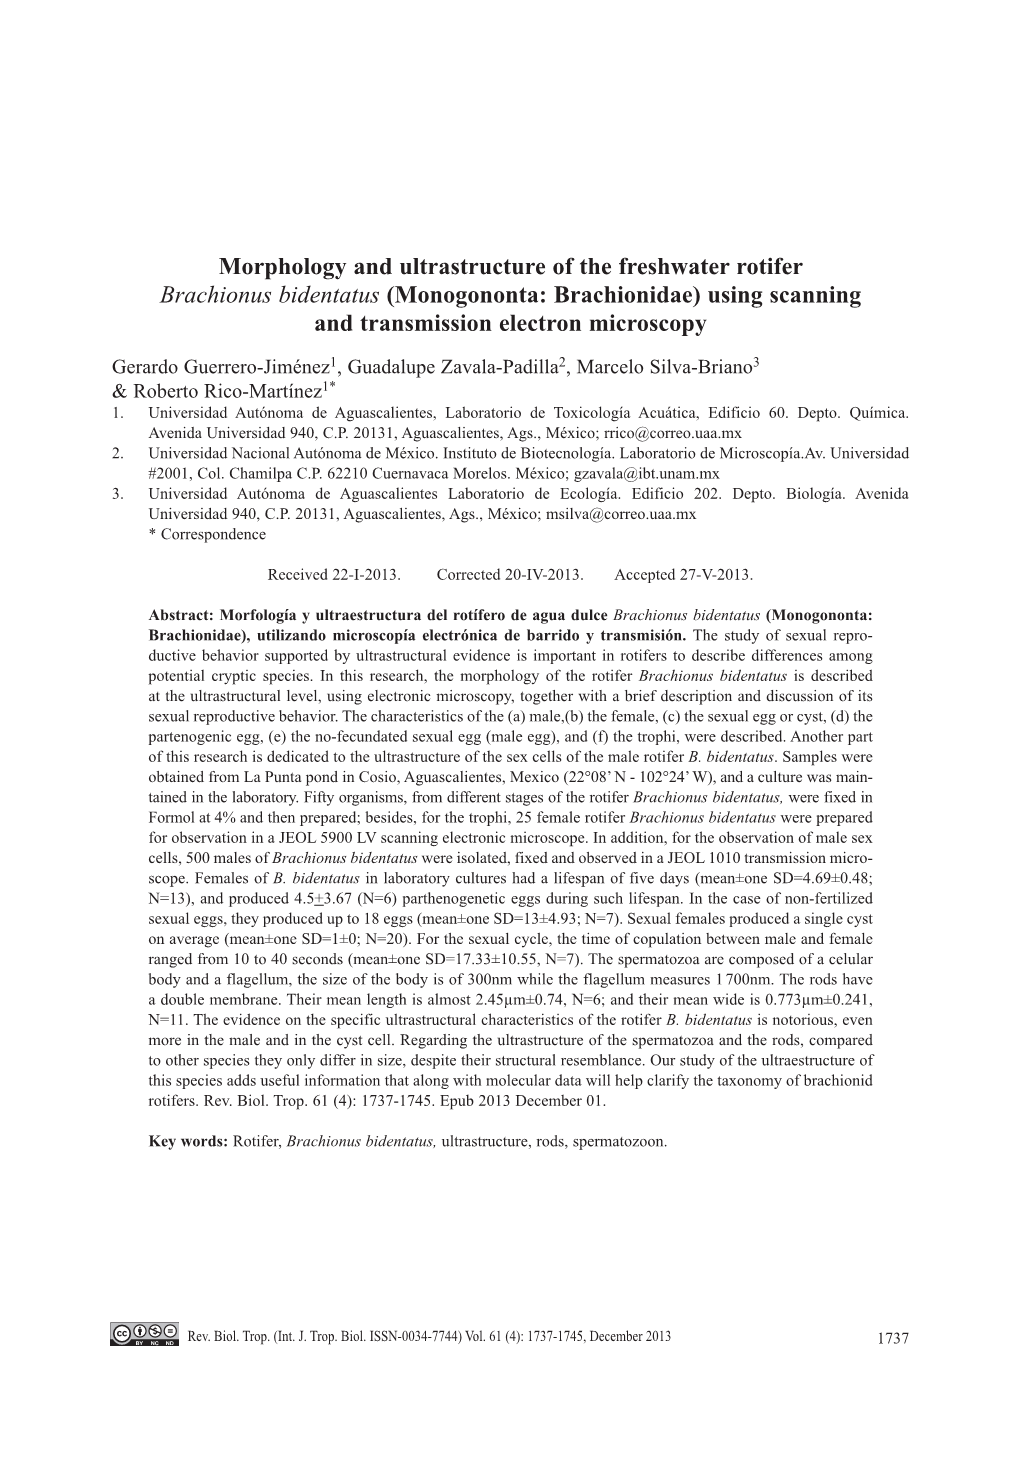 Morphology and Ultrastructure of the Freshwater Rotifer Brachionus Bidentatus (Monogononta: Brachionidae) Using Scanning and Transmission Electron Microscopy